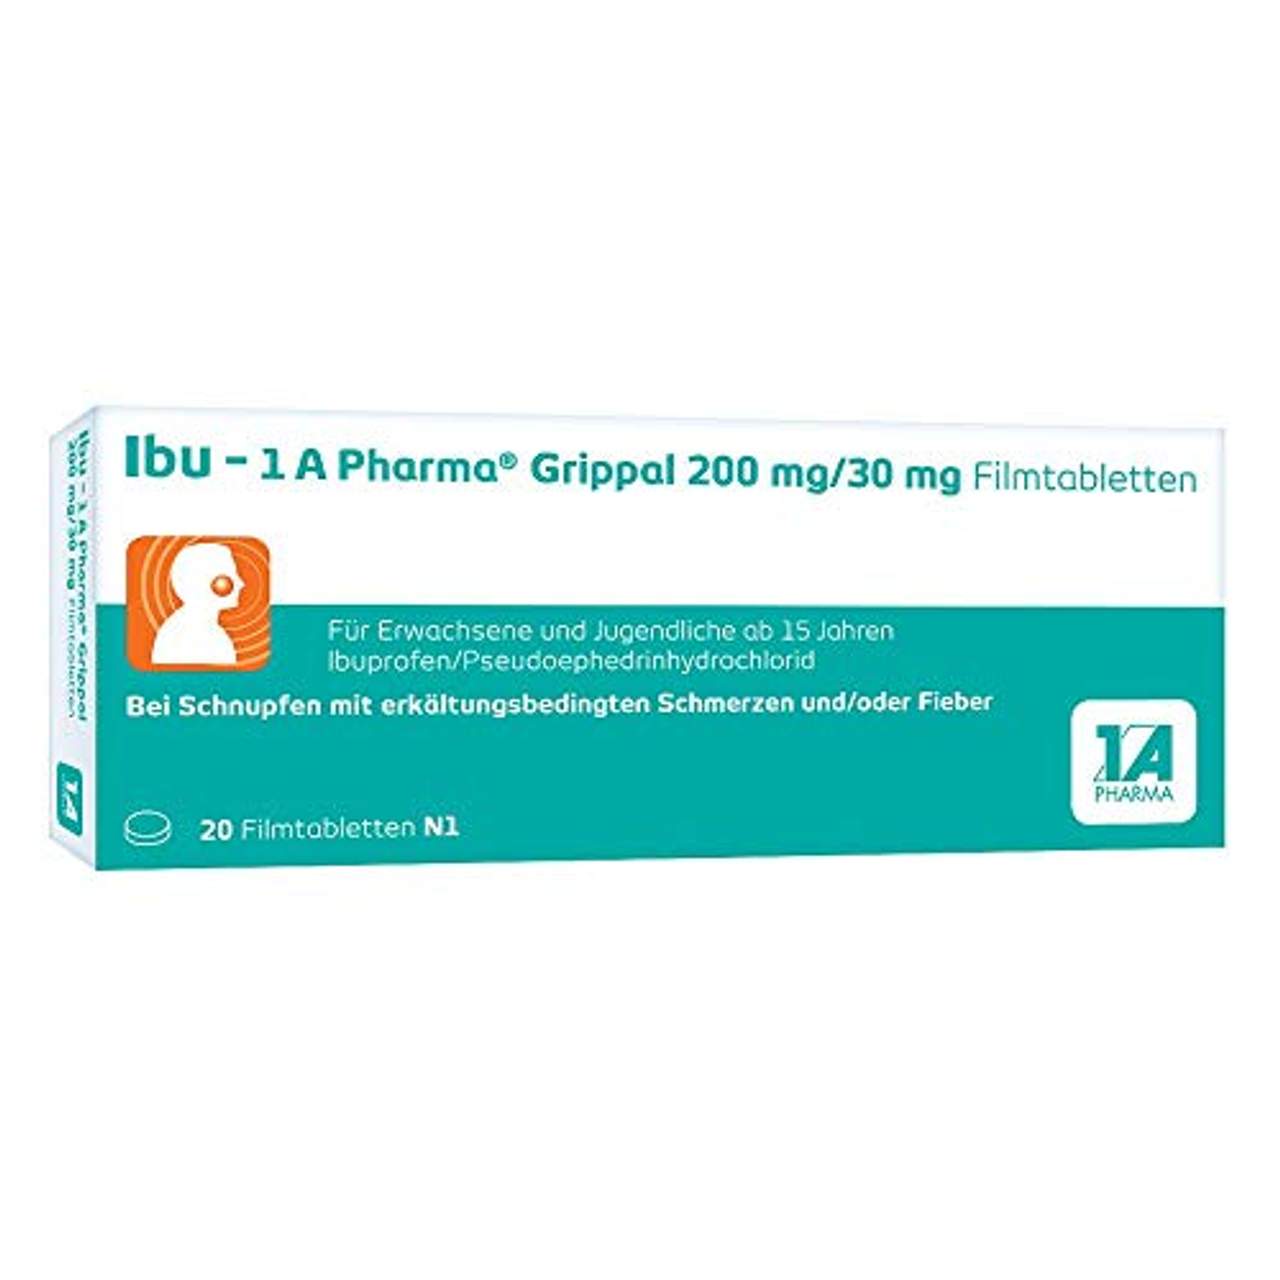 1 A Pharma GmbH Ibu 1 A Pharma Grippal 200 mg/30 mg Filmtabletten